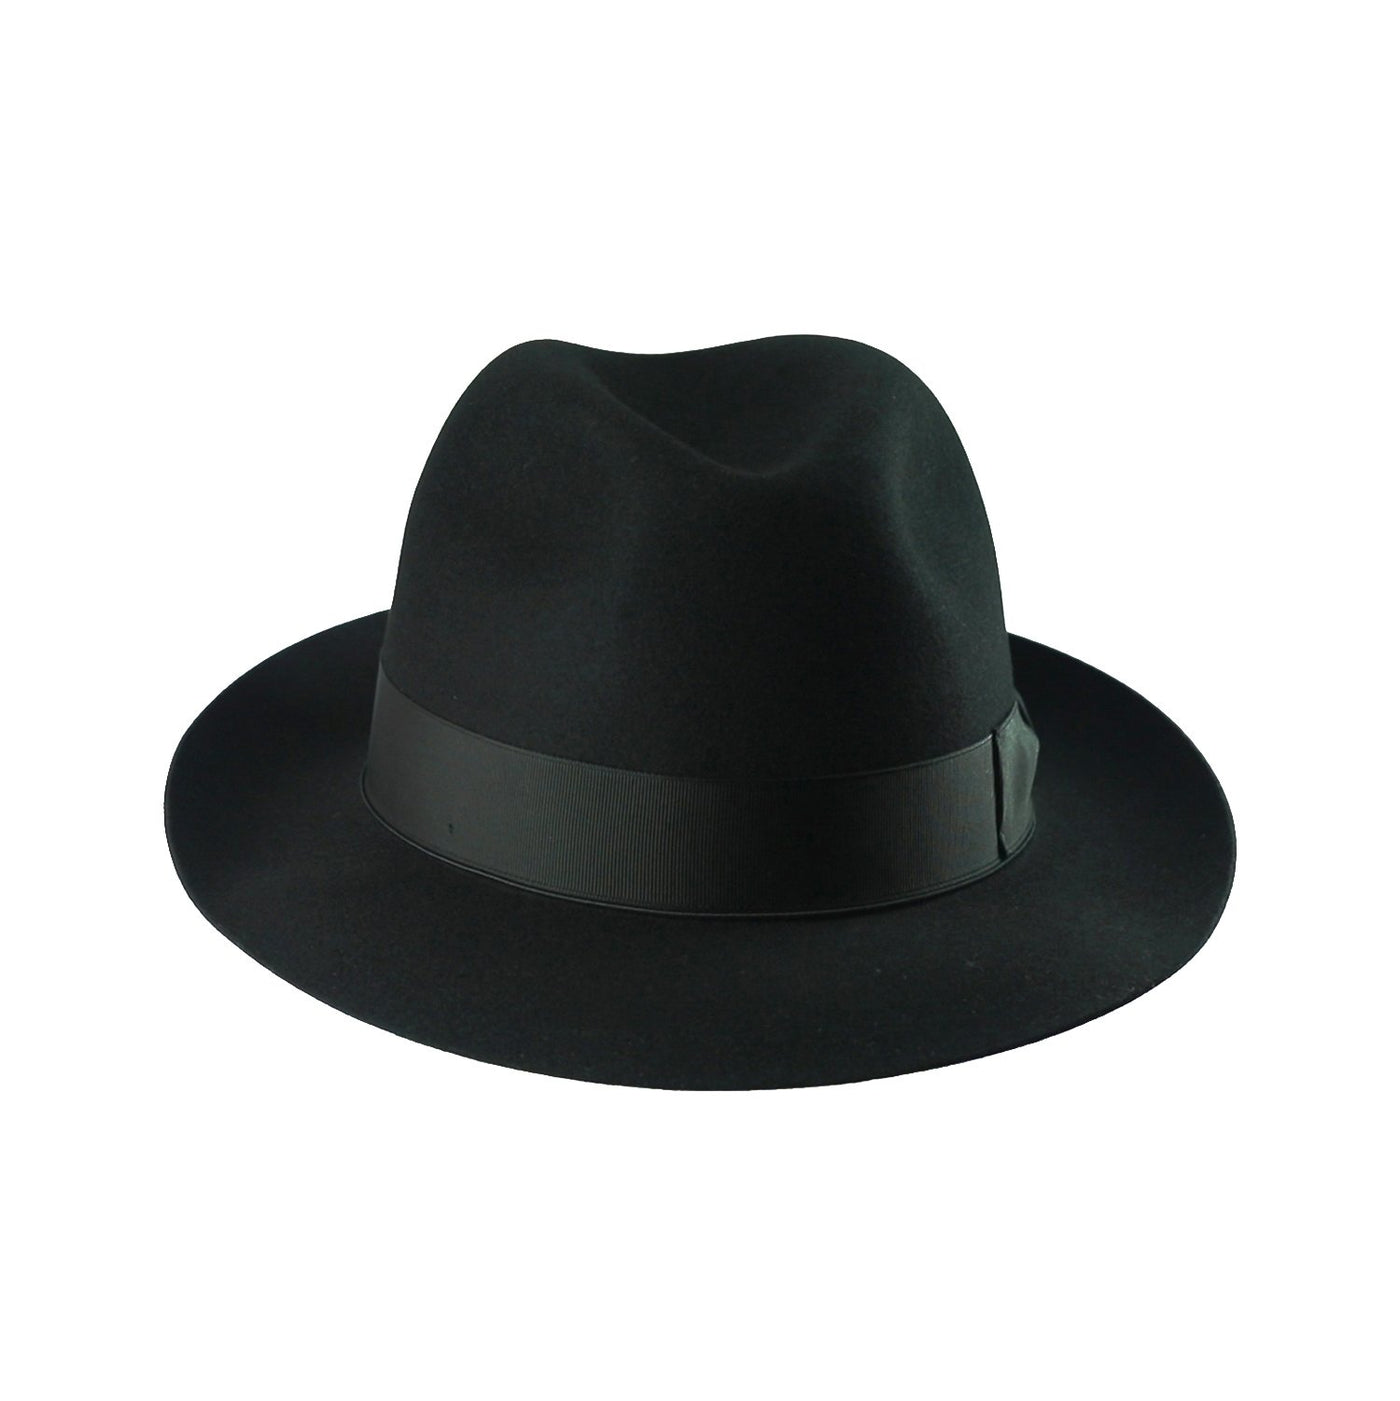 Andelli 214 - Black, product_type] - Borsalino for Atica fedora hat